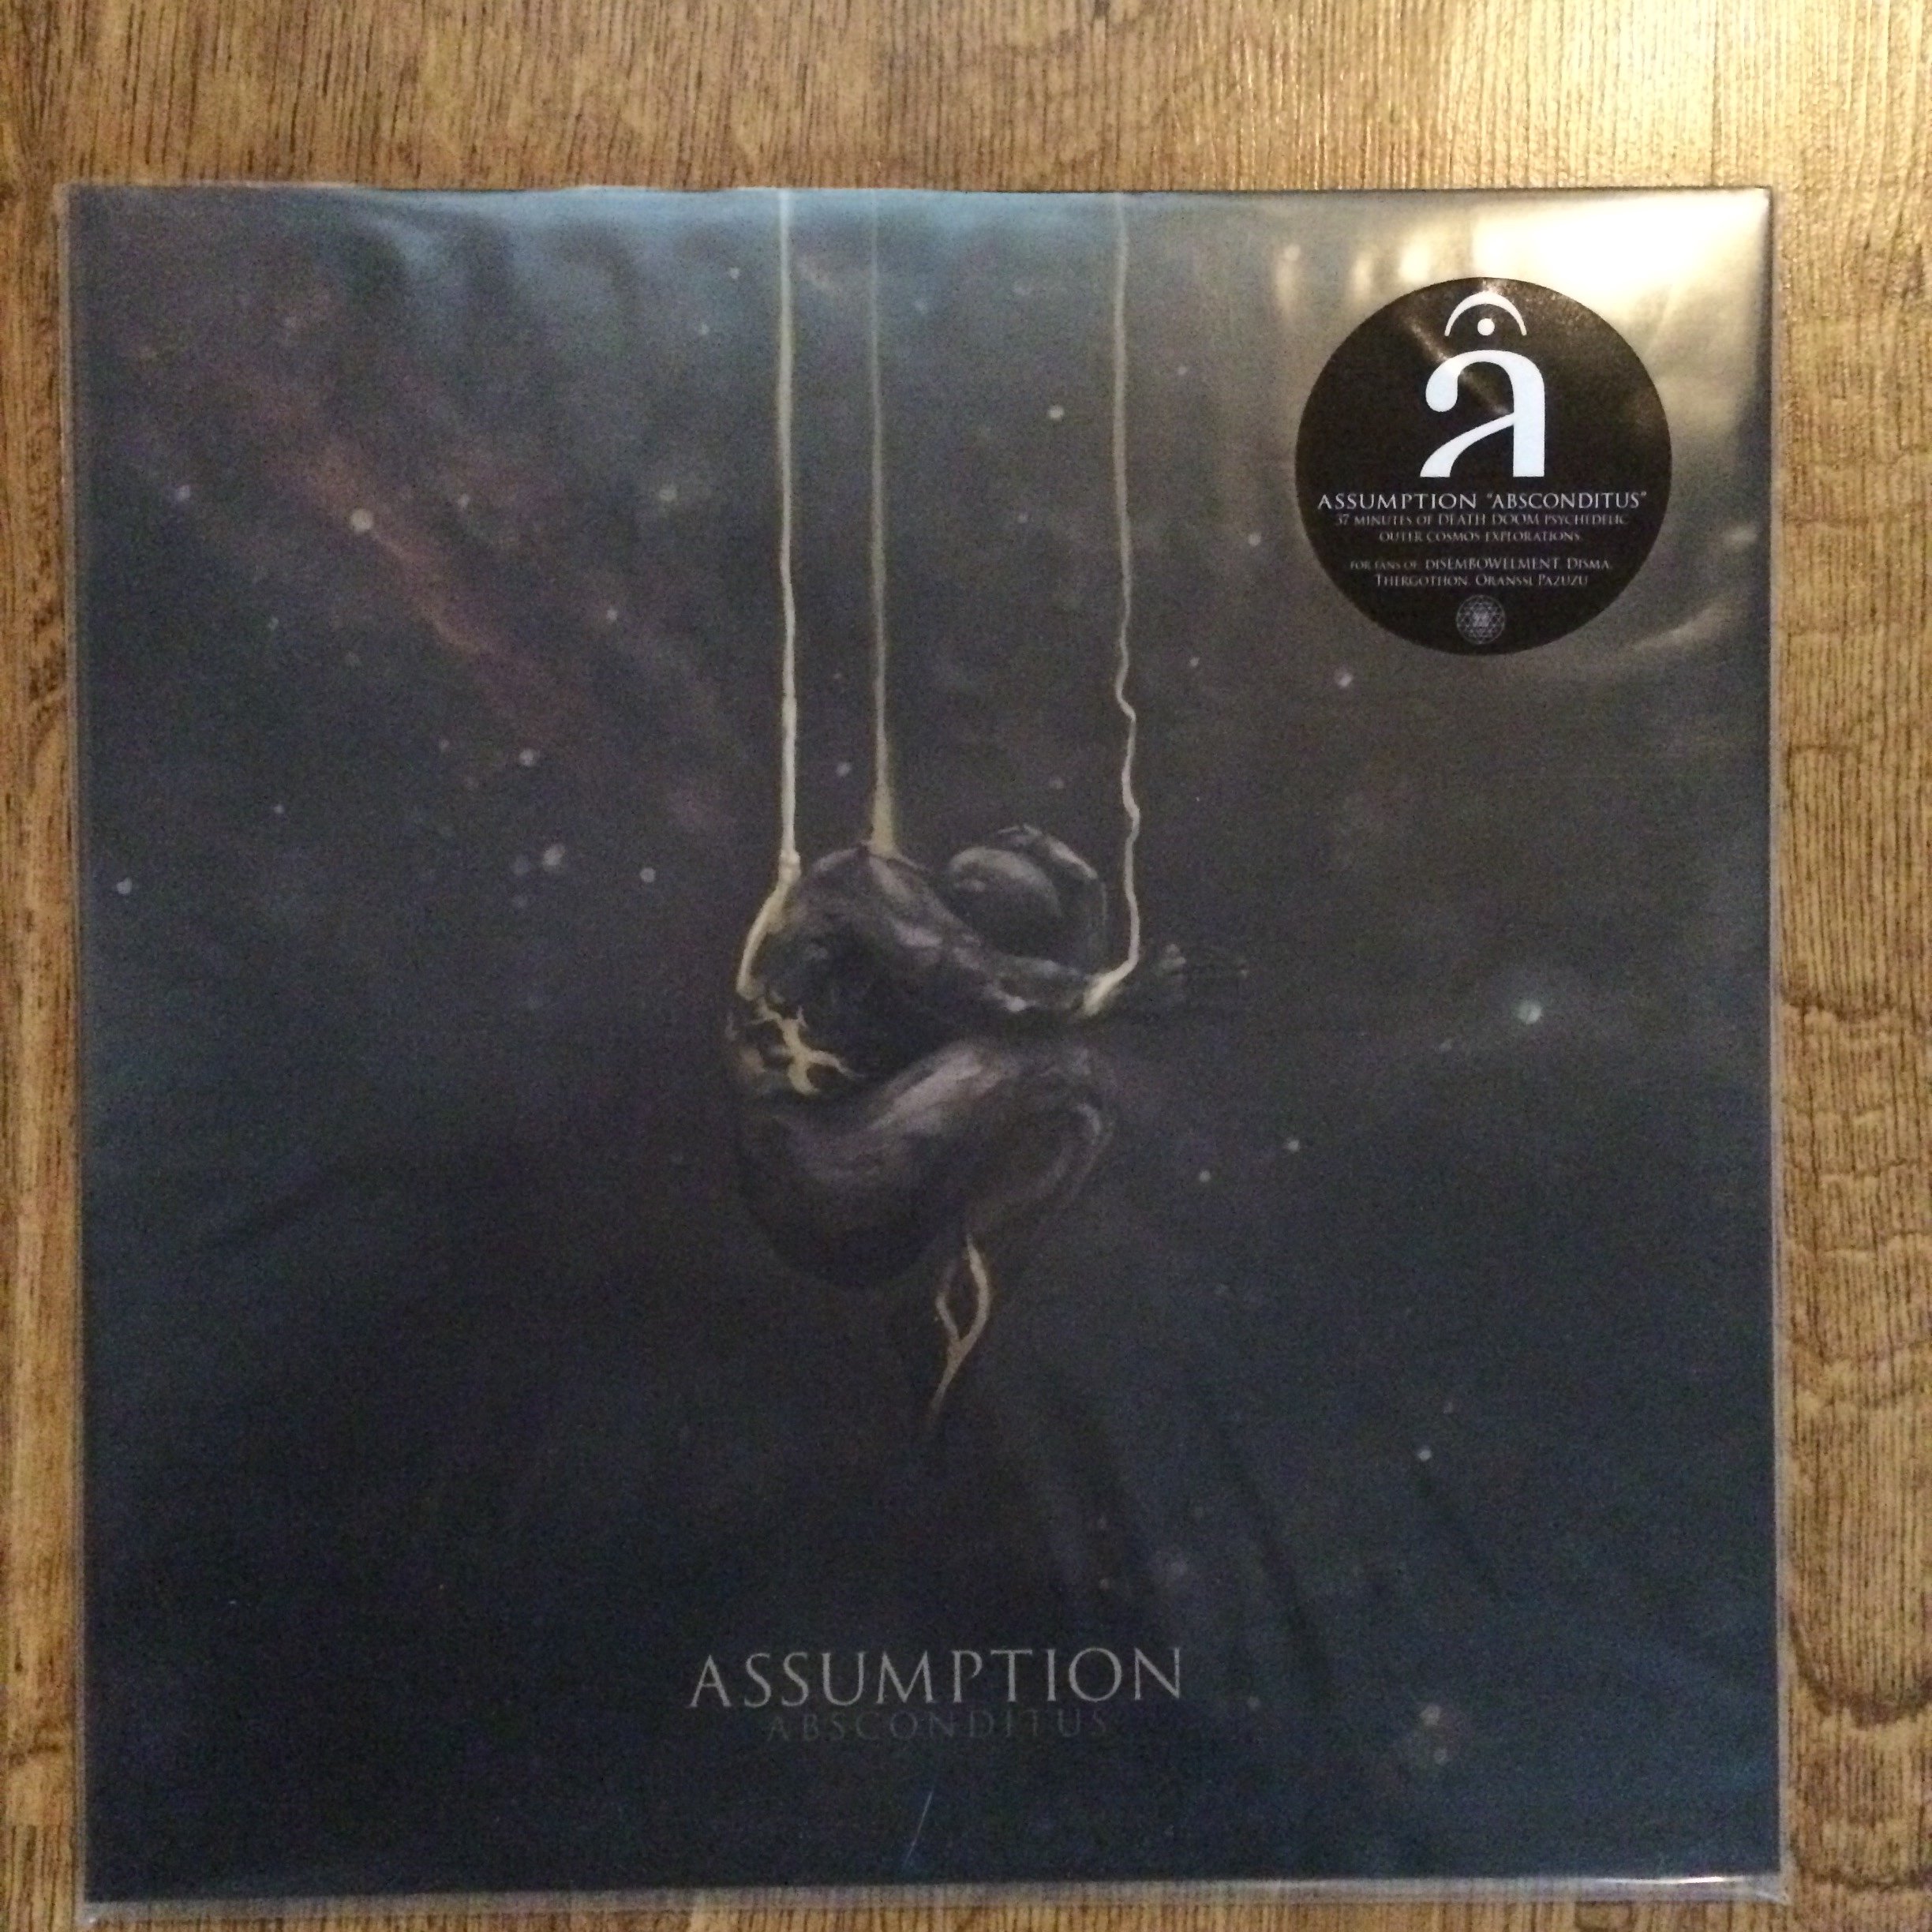 Photo of the Assumption - "Absconditus" LP (Black vinyl)